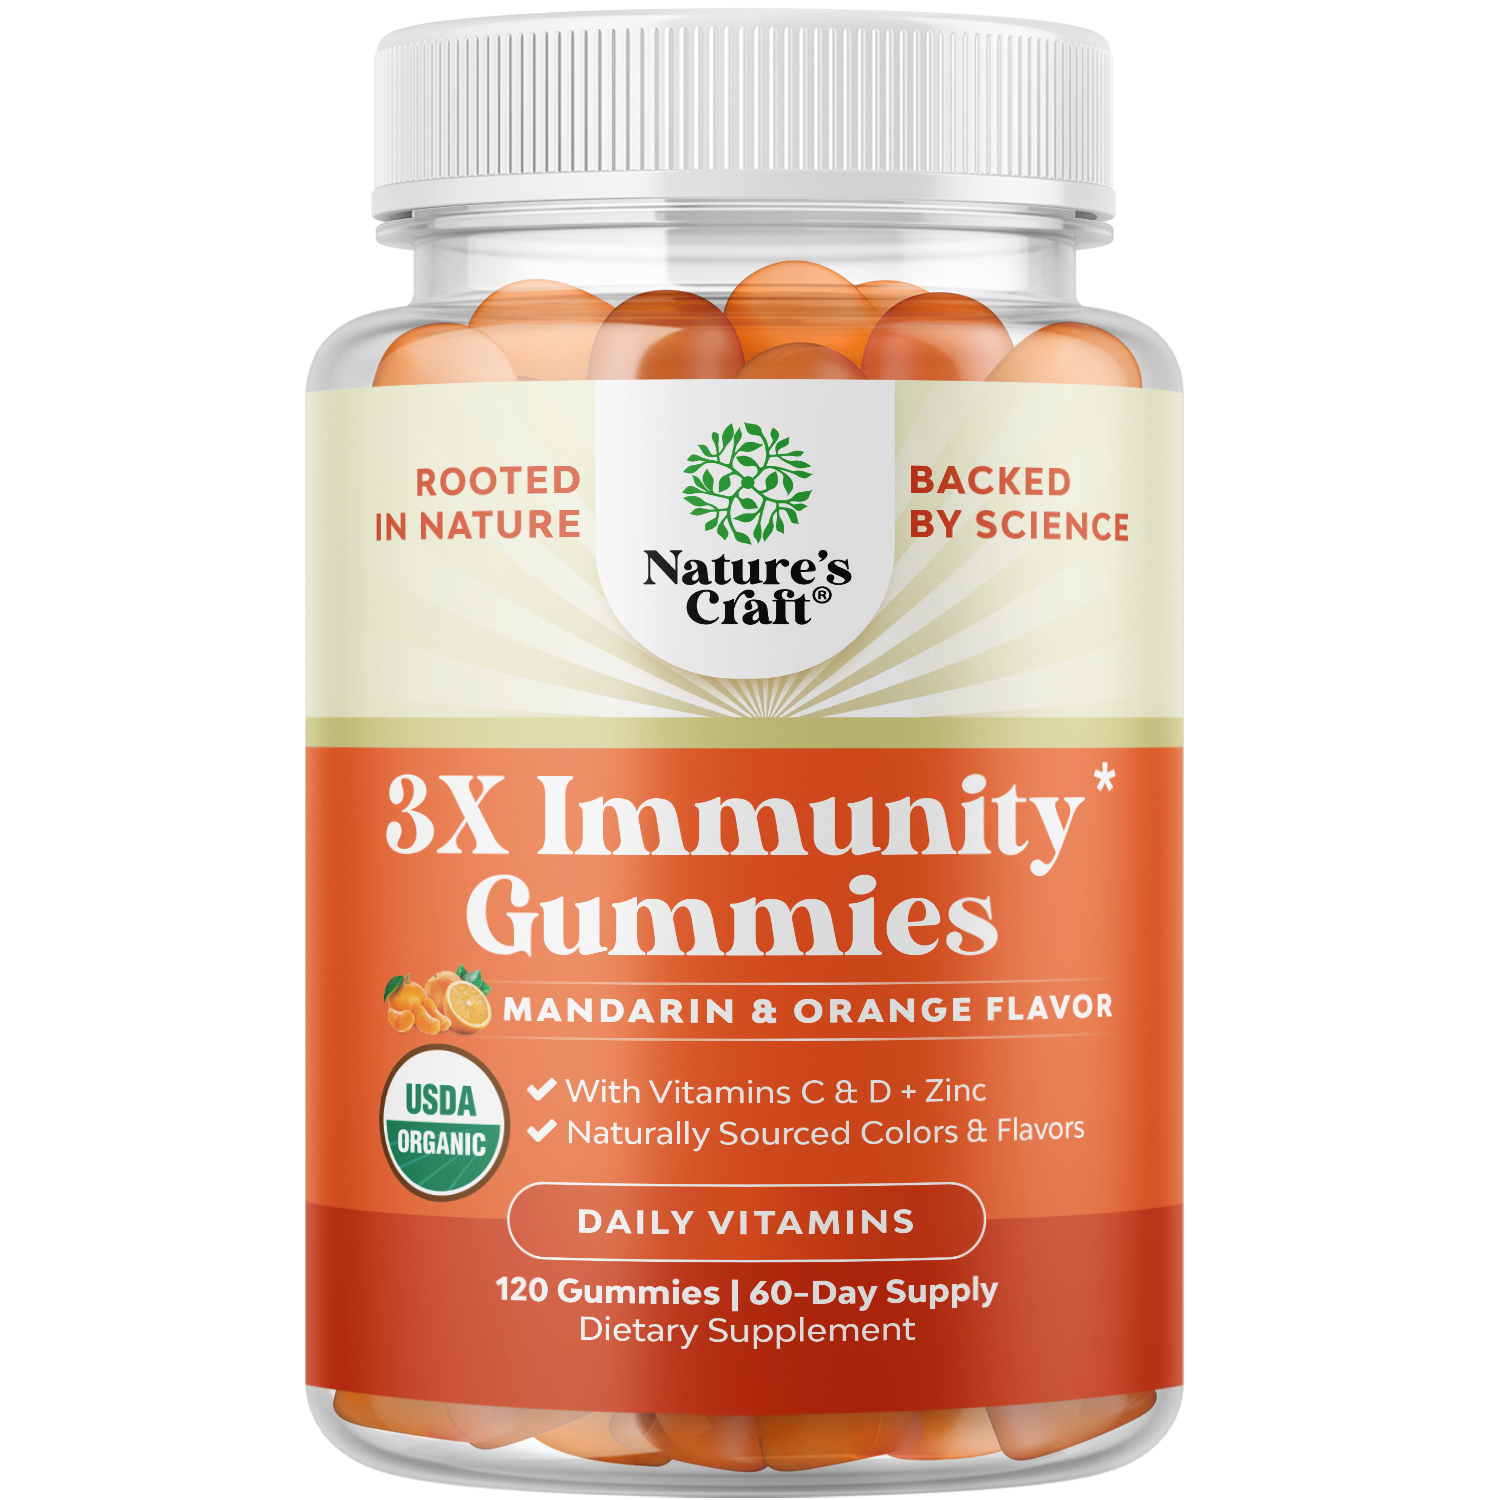 3X Immunity Gummies - 120 Gummies